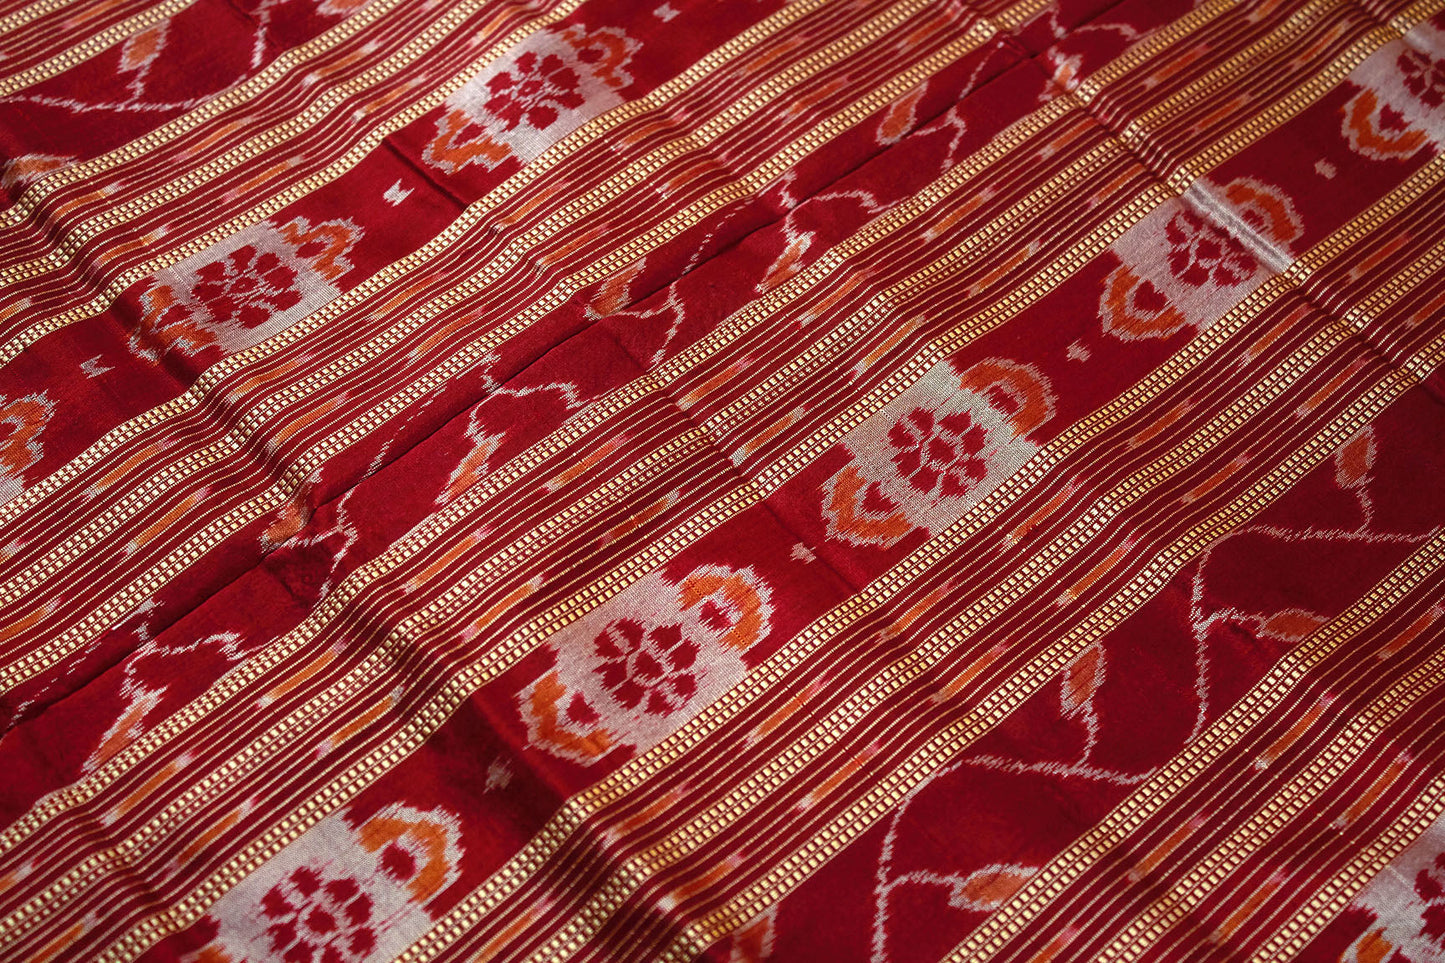 Saptapar Sambalpuri Sari en soie double ikat